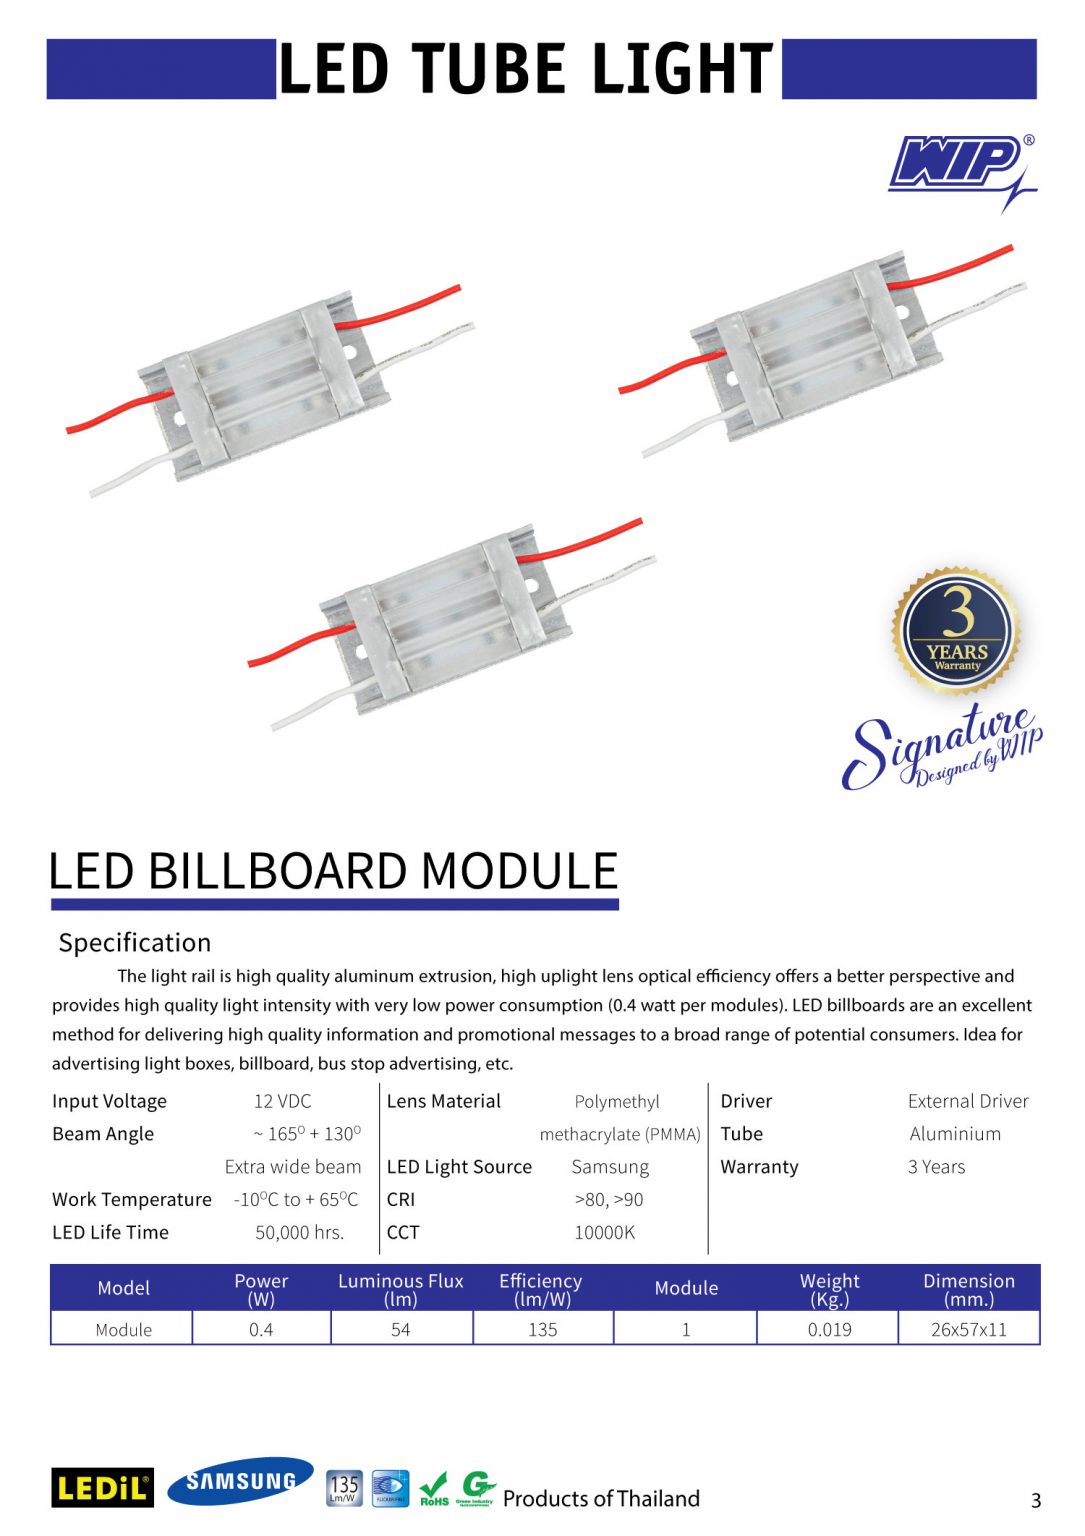 LED Billboard module